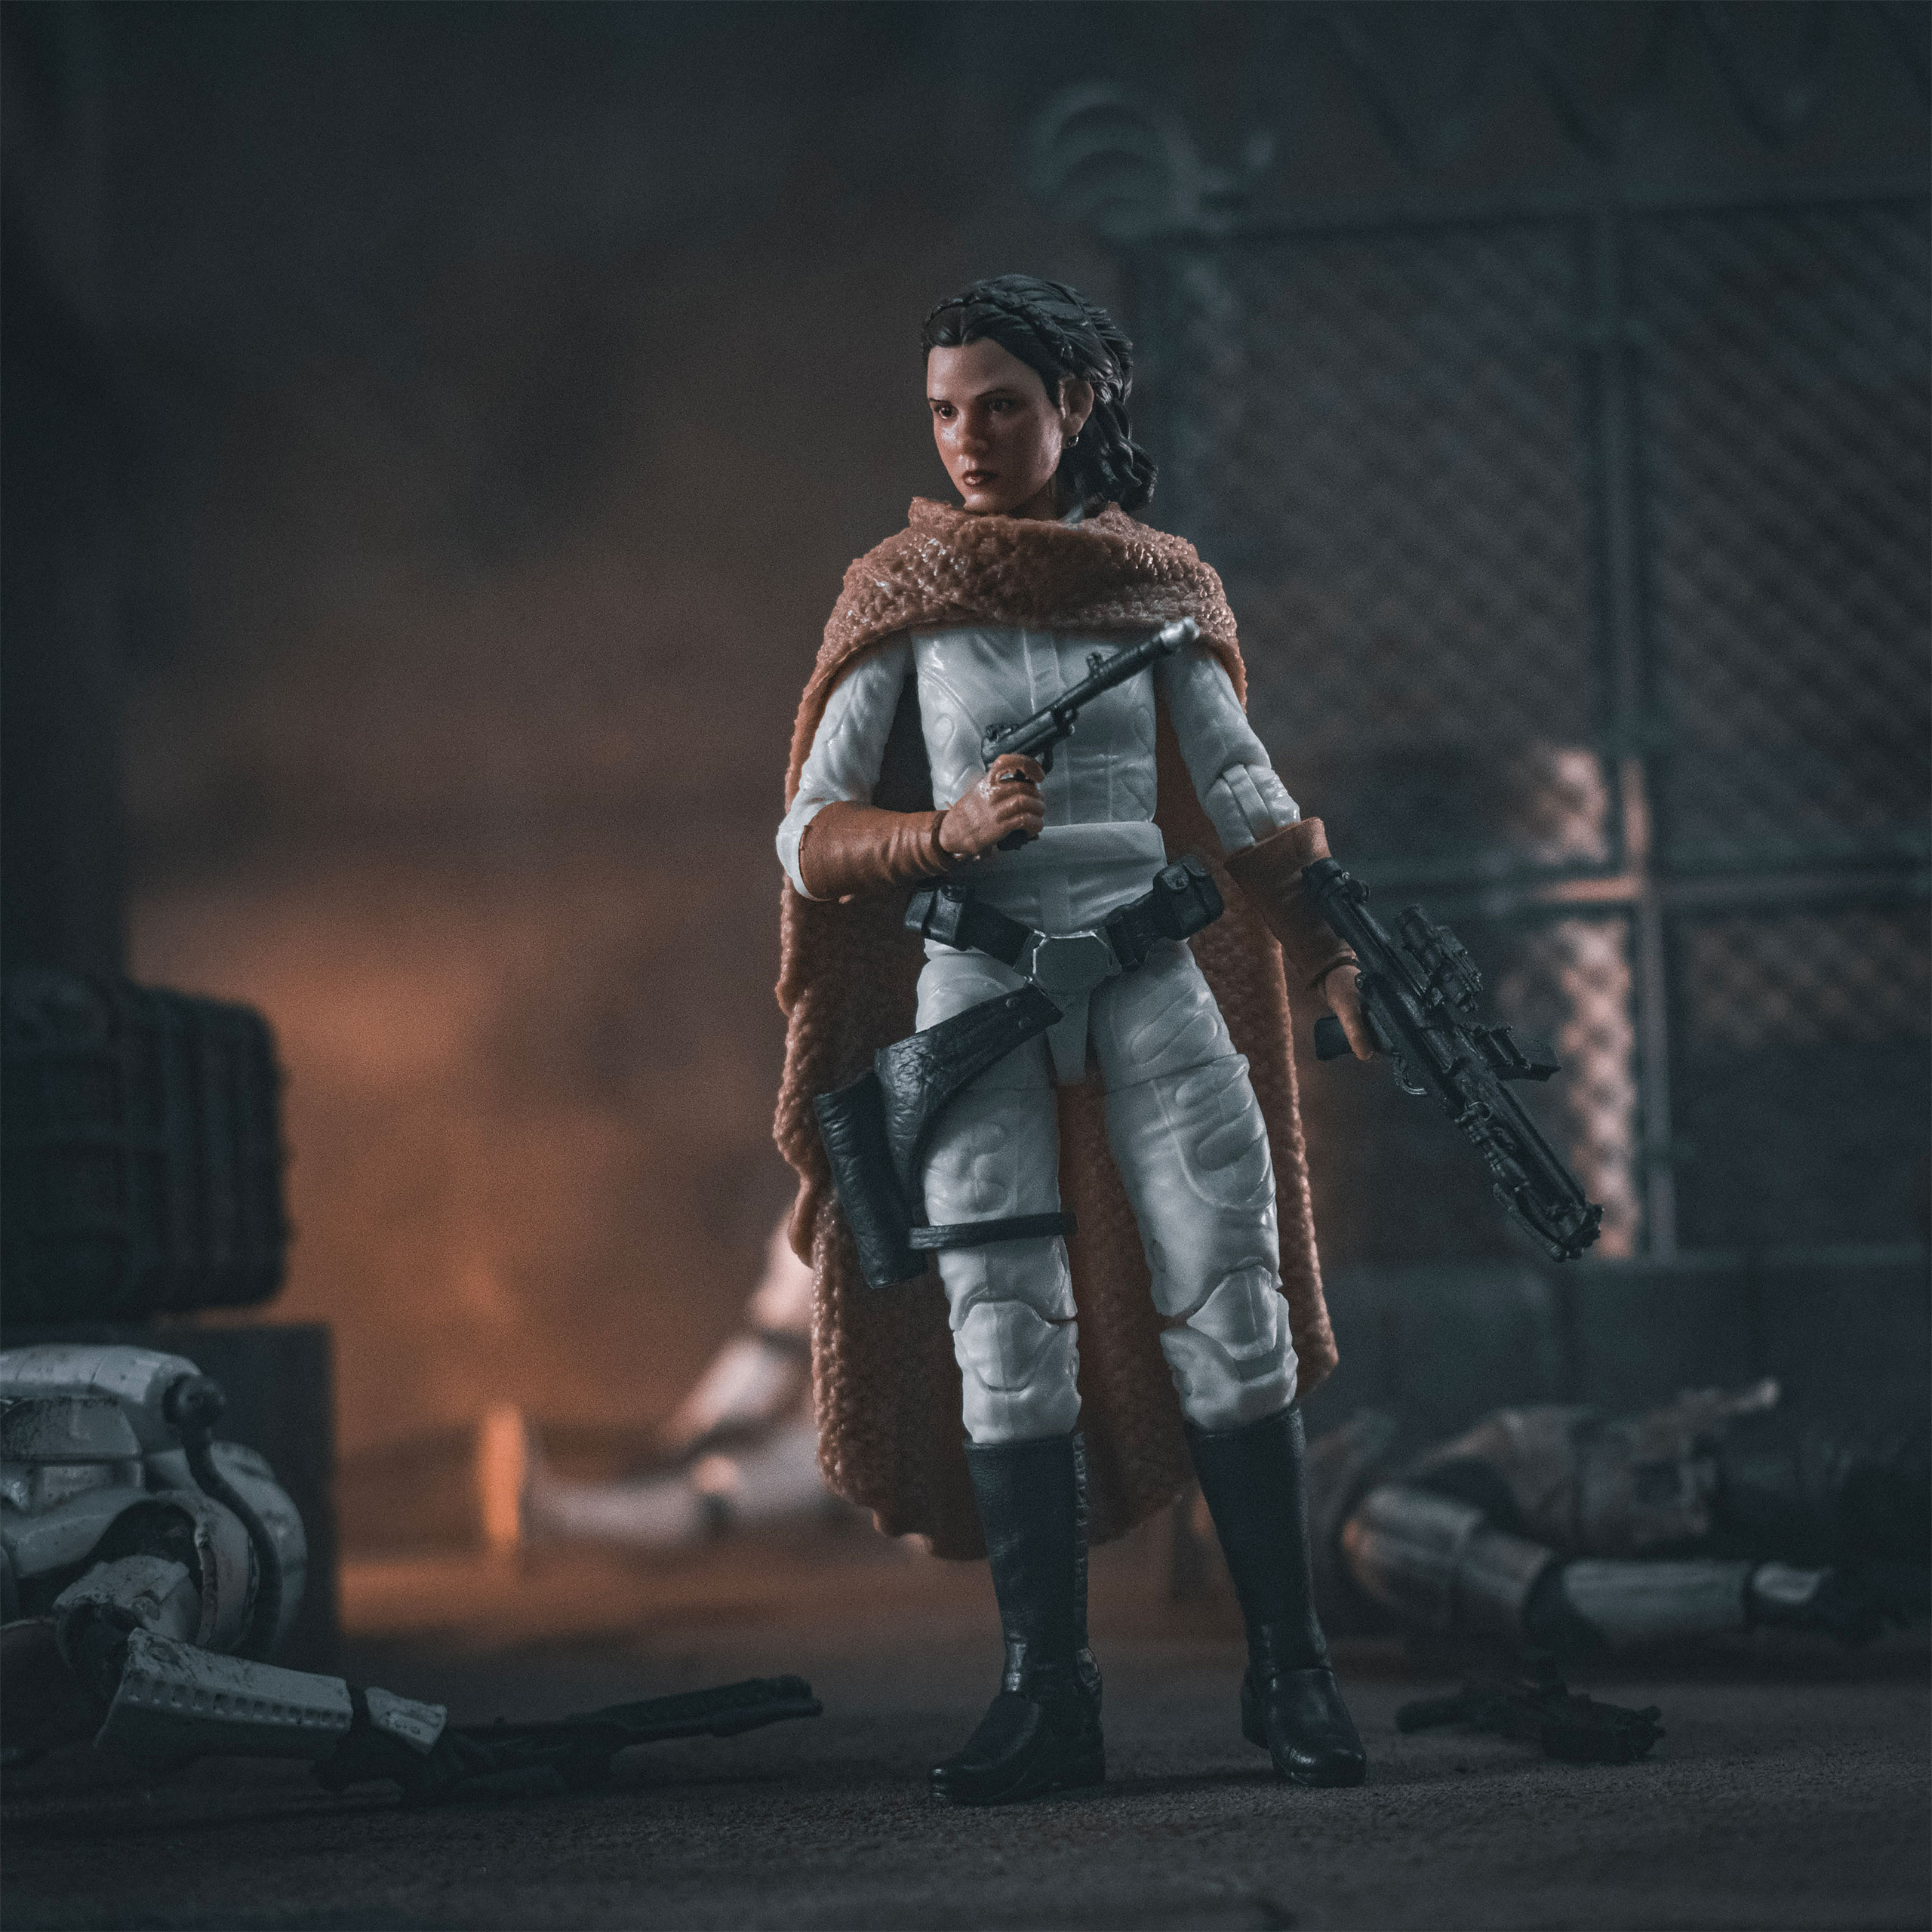 Star Wars - Princess Leia Action Figure